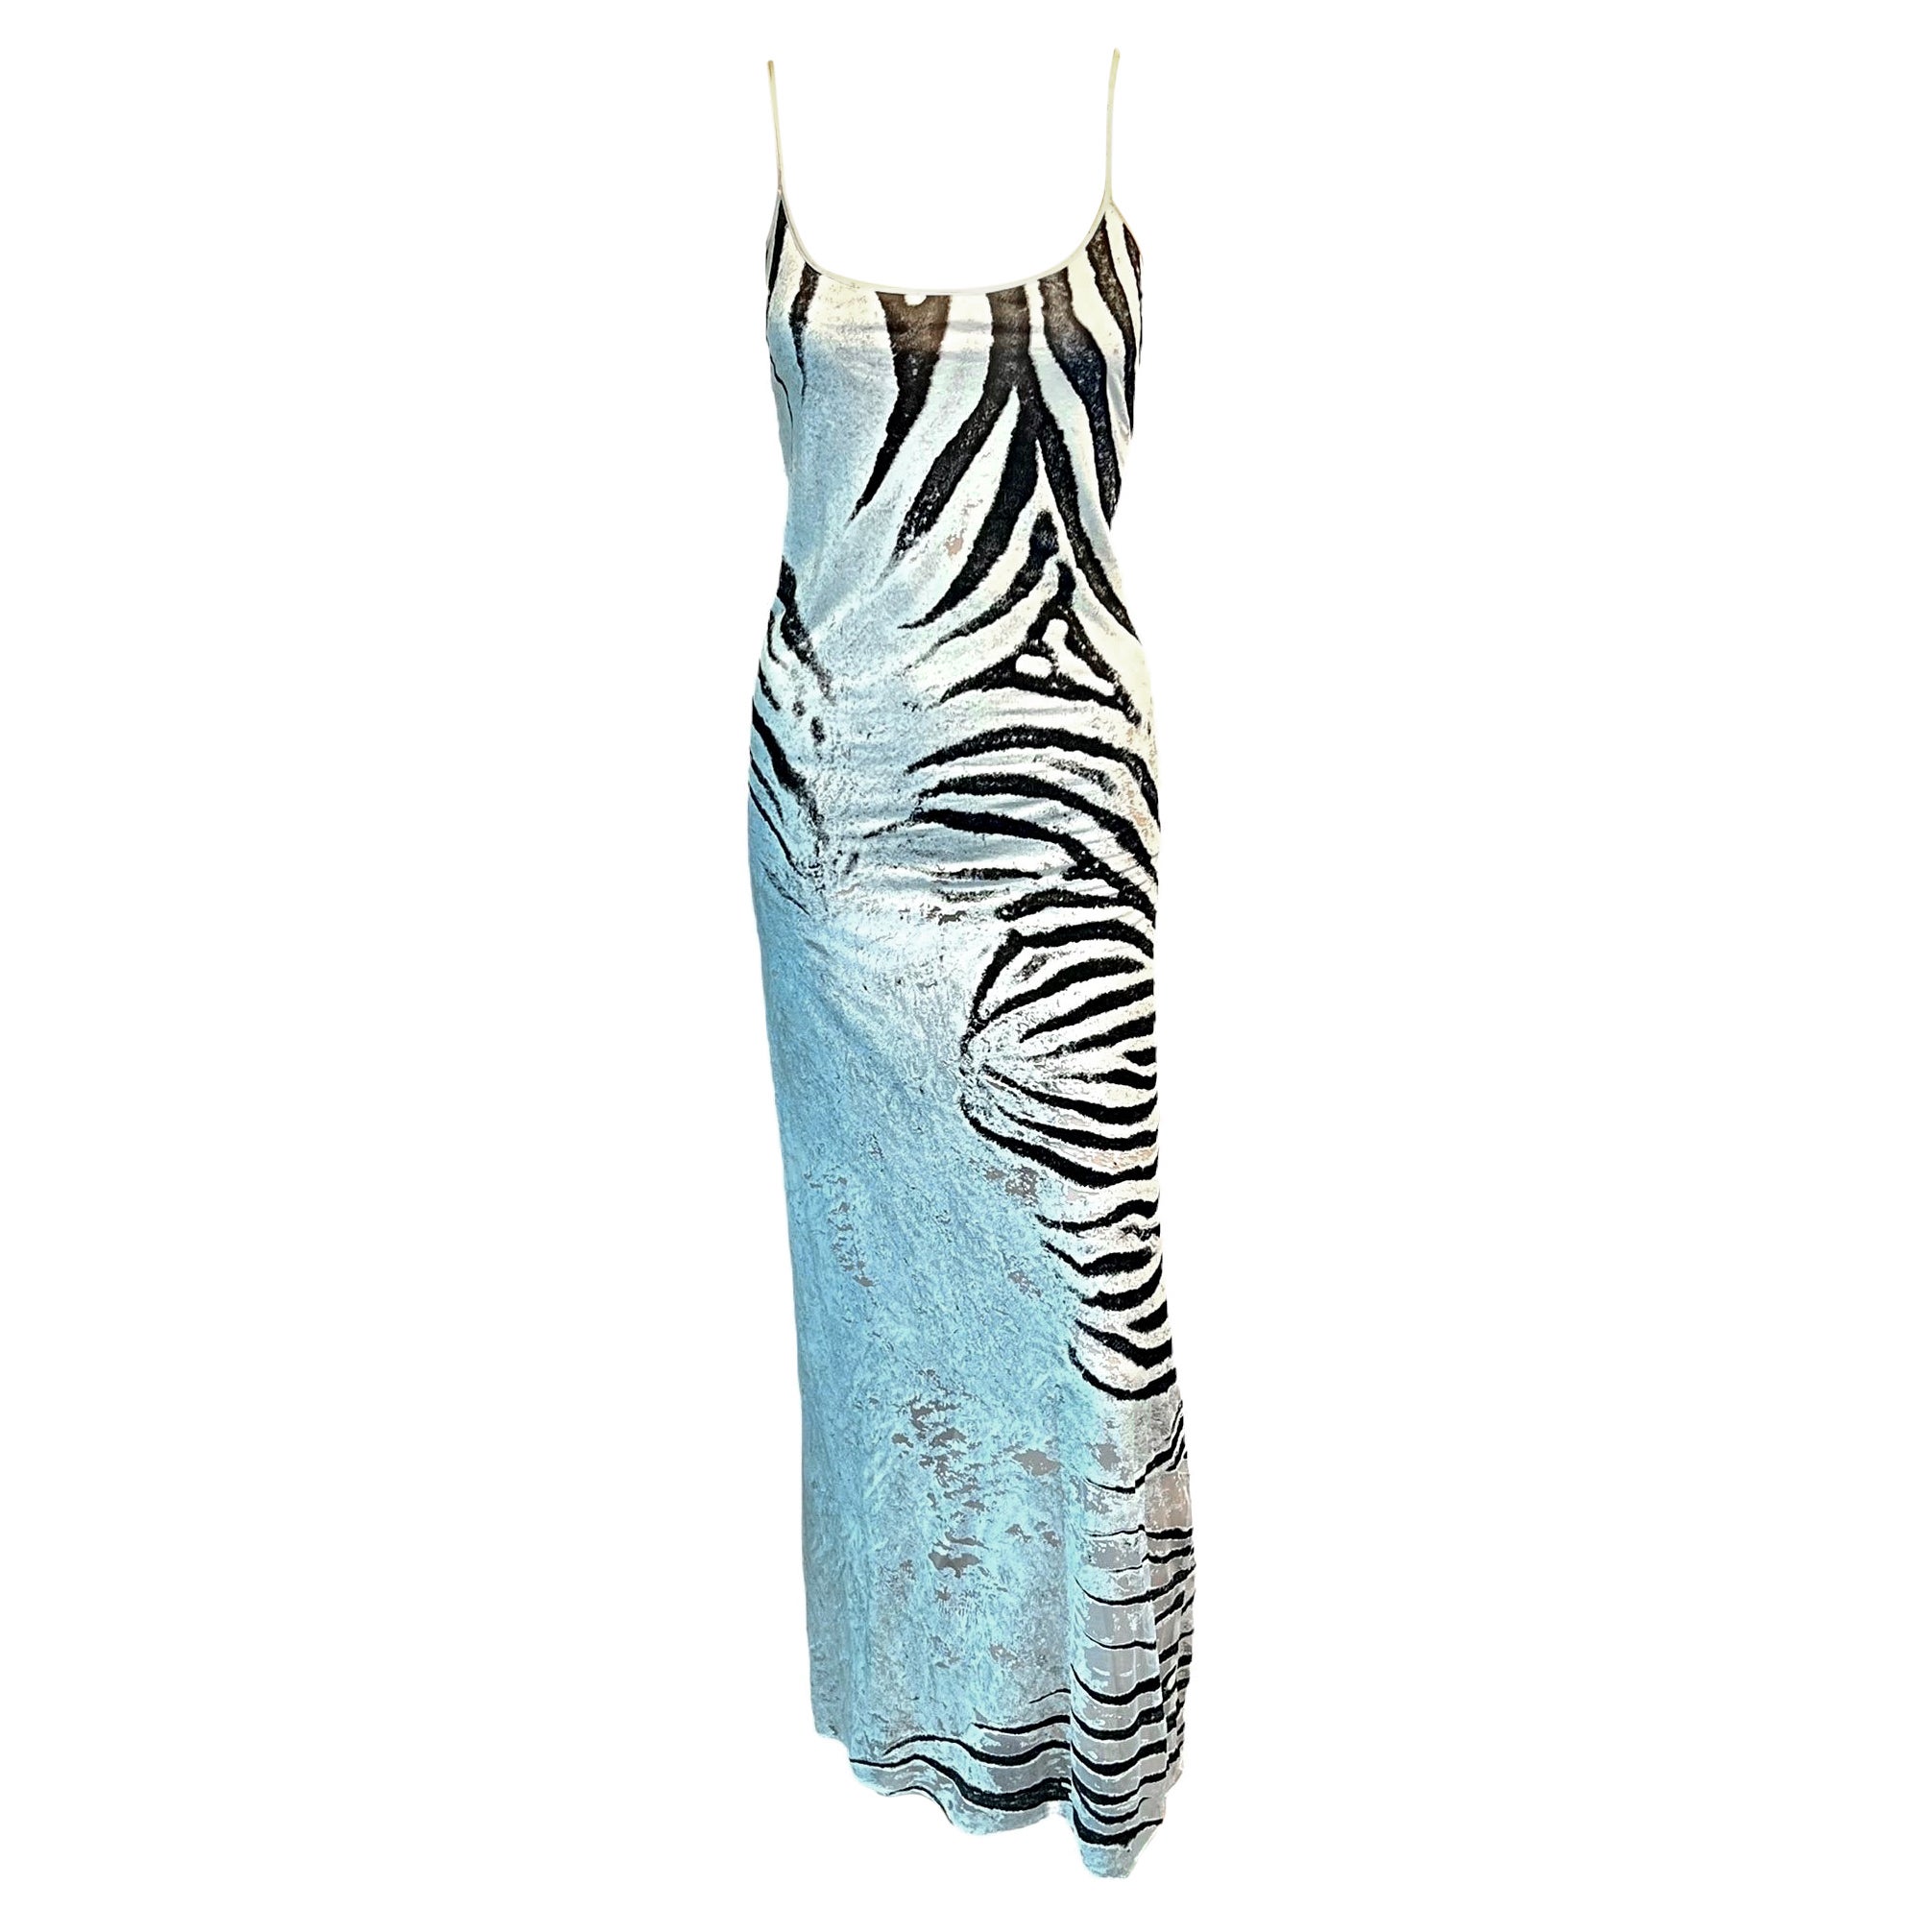 Roberto Cavalli S/S 1999 Runway Sheer Mesh Zebra Print Slip Evening Dress Gown For Sale